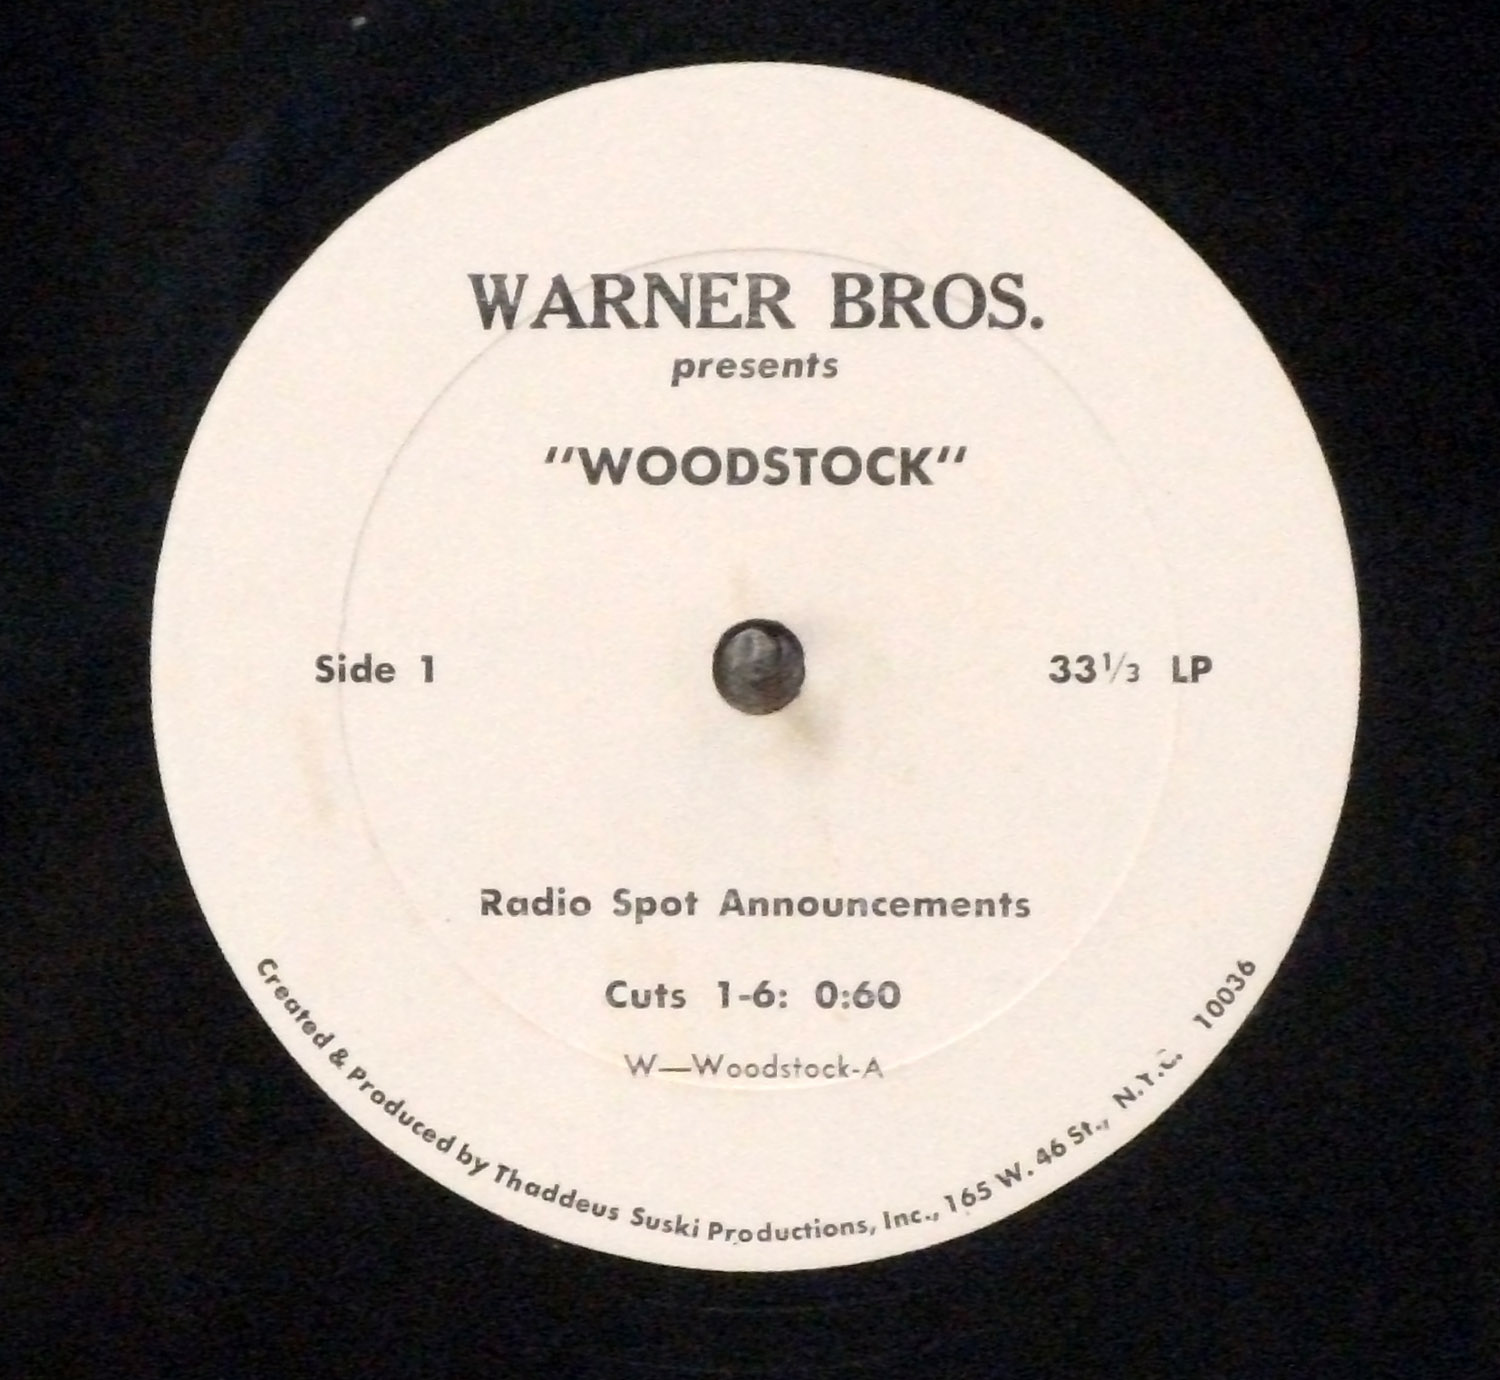 Woodstock - Ultra rare 1970 10" radio spots LP for film